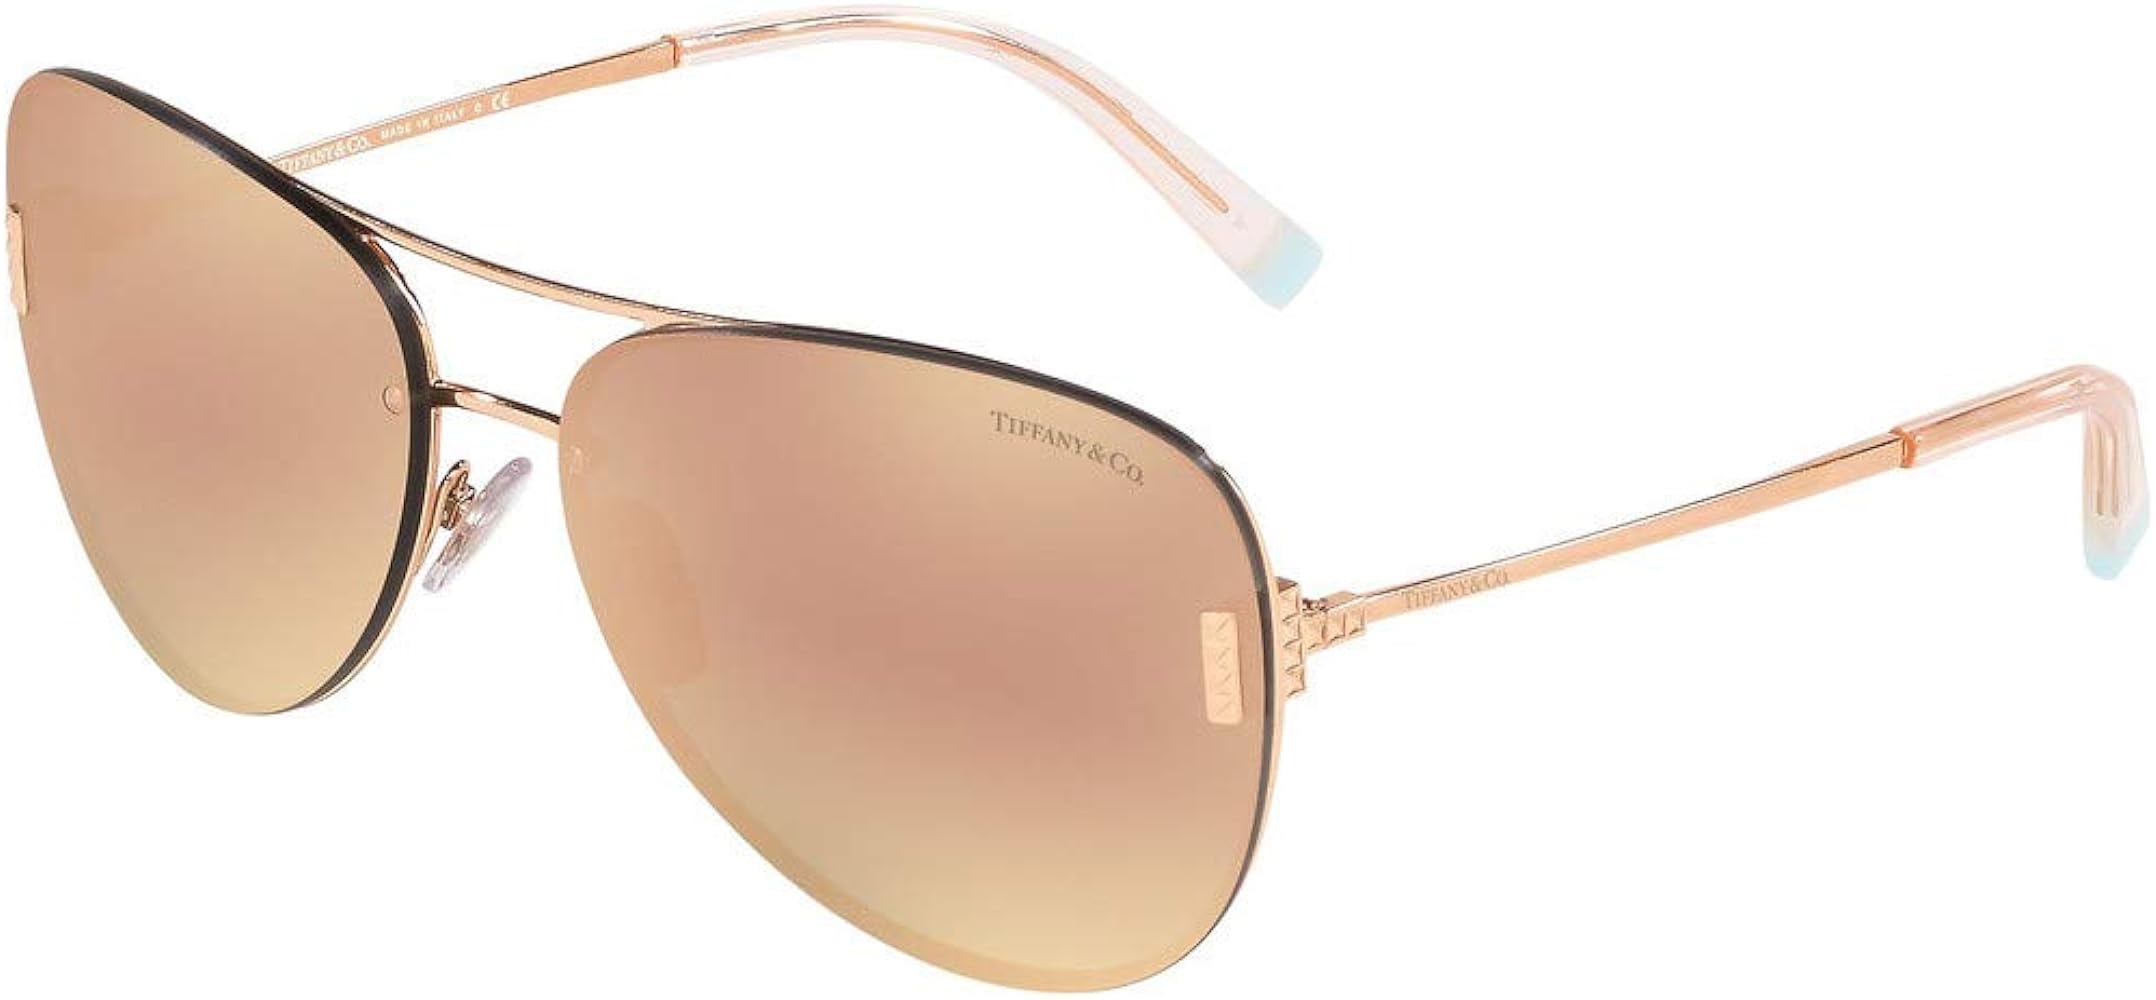 Tiffany & Co TF3066 - 61054Z Sunglasses RUBEDO w/ GREY MIRROR ROSE GOLD Lens 62mm at Amazon Women’s Clothing store